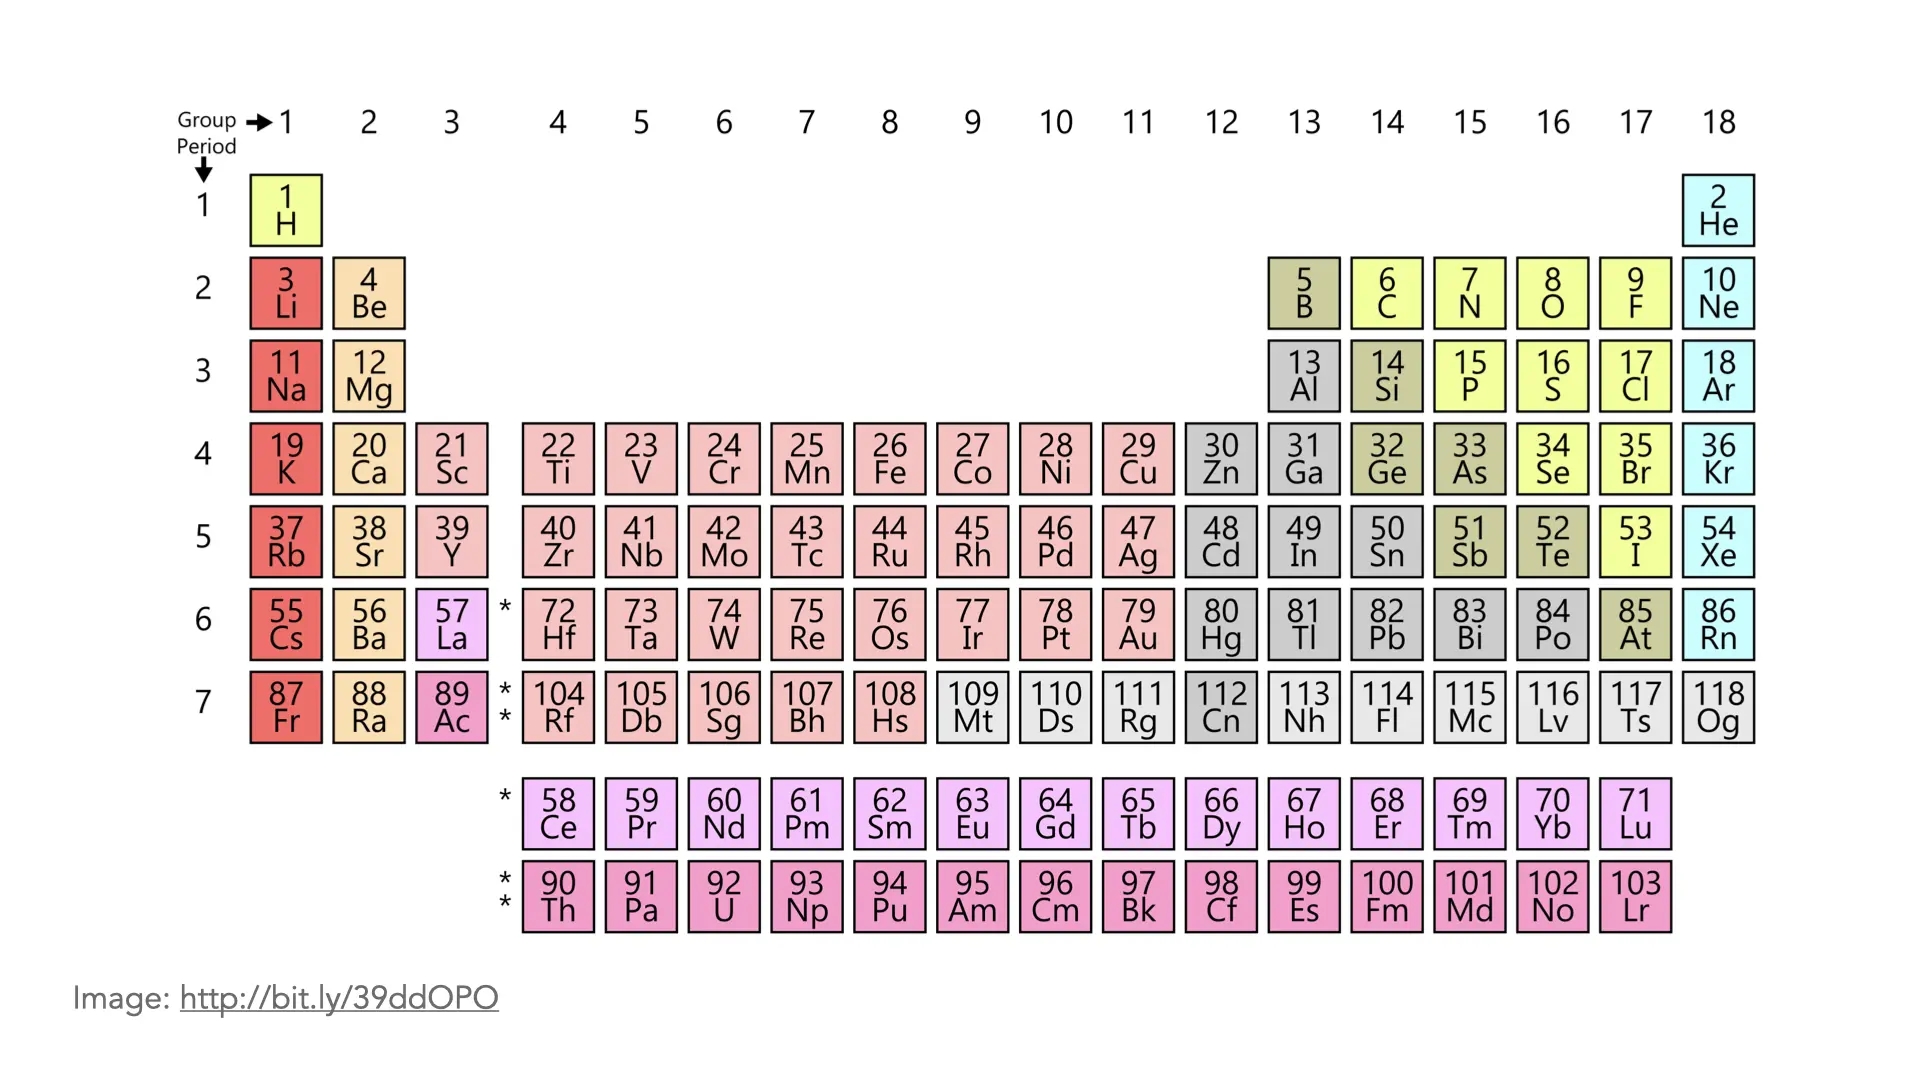 Image via [Wikipedia](https://en.wikipedia.org/wiki/Periodic_table#/media/File:Simple_Periodic_Table_Chart-en.svg)